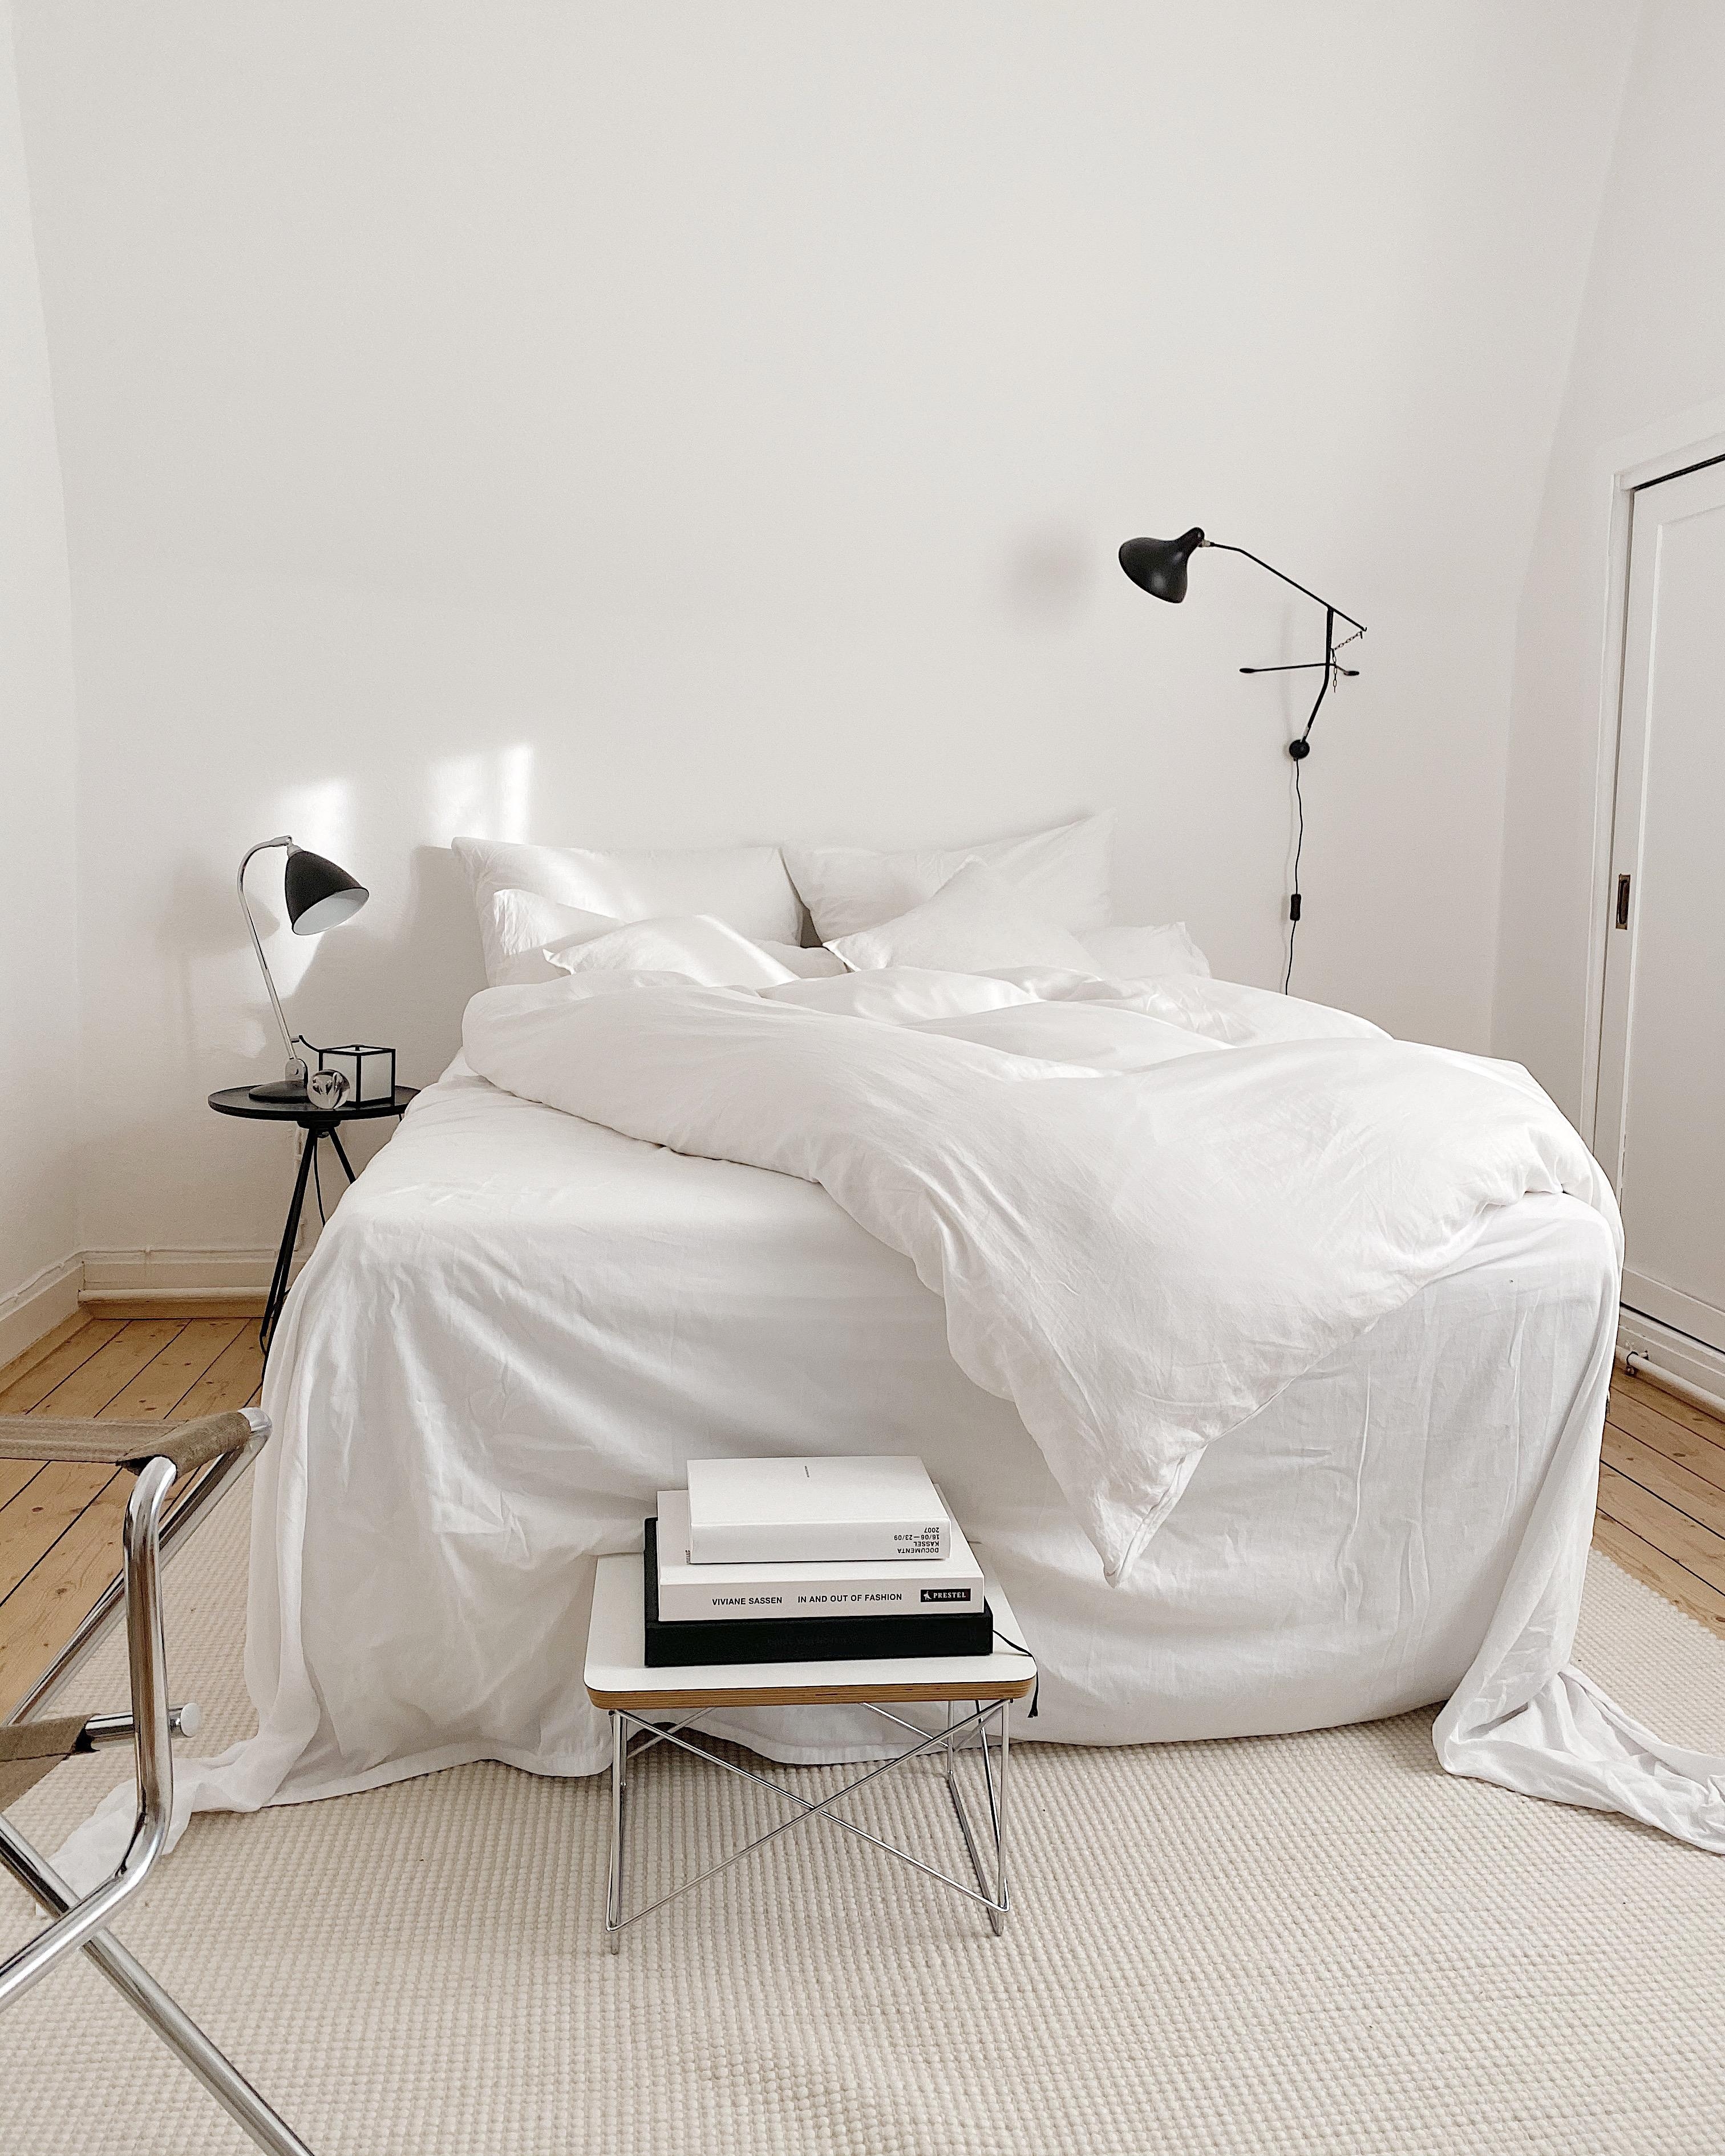 White bedroom goals #bedroom #cozycorner #whiteliving